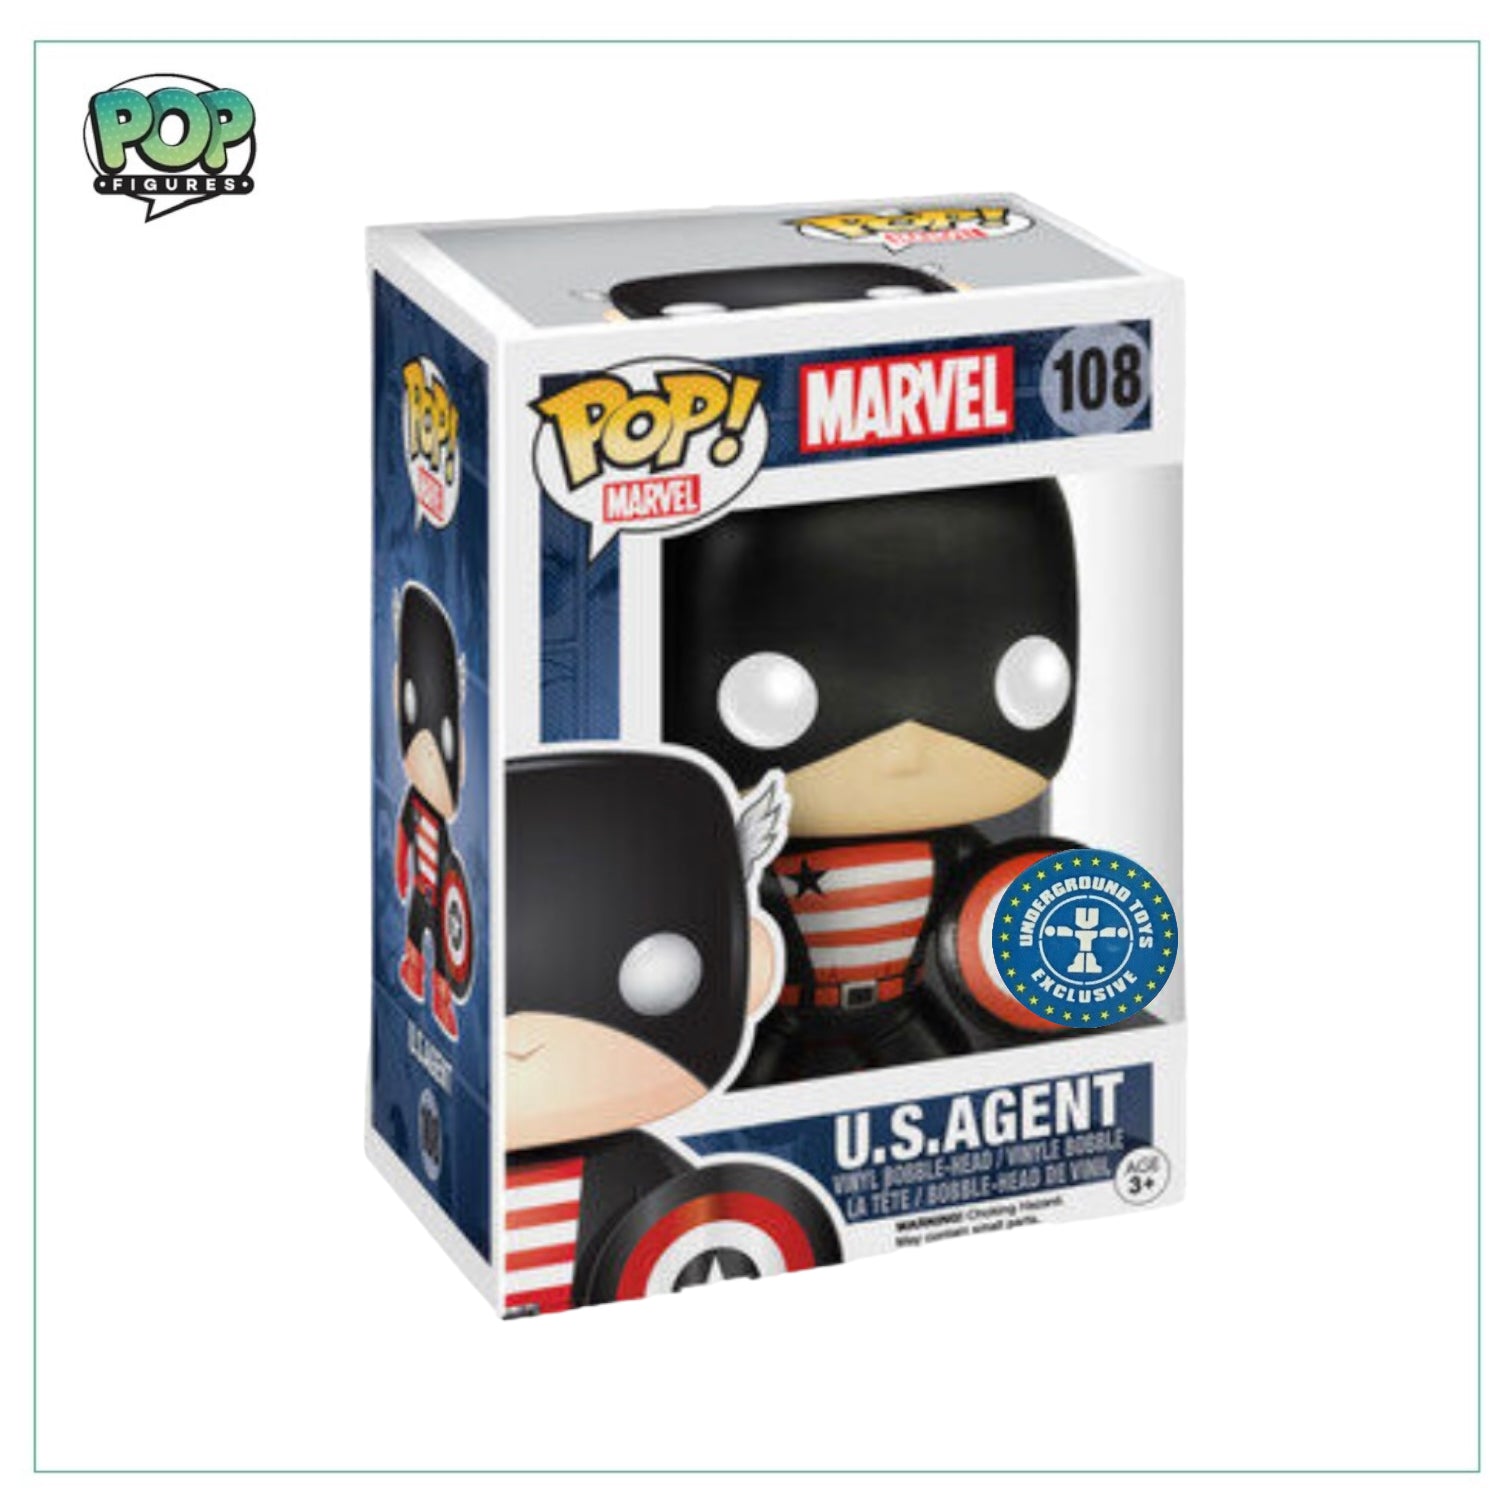 U.S.Agent #108 Funko Pop! - Marvel - 2105 Pop - Condition 8.5 / 10 - Underground Toys Exclusive